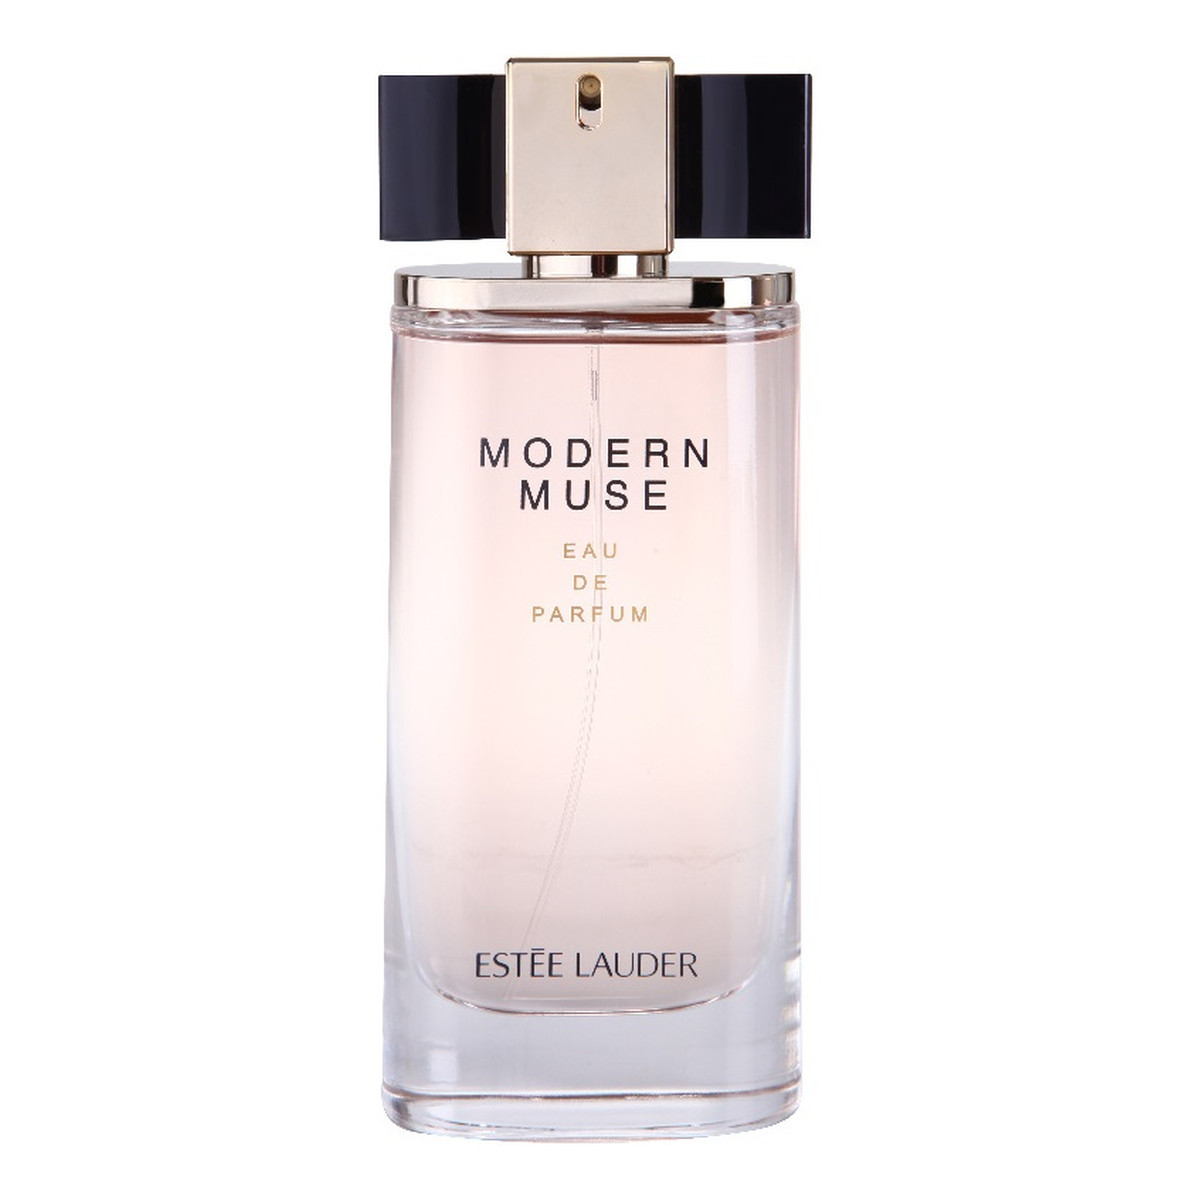 Estee Lauder Modern Muse woda perfumowana dla kobiet 100ml